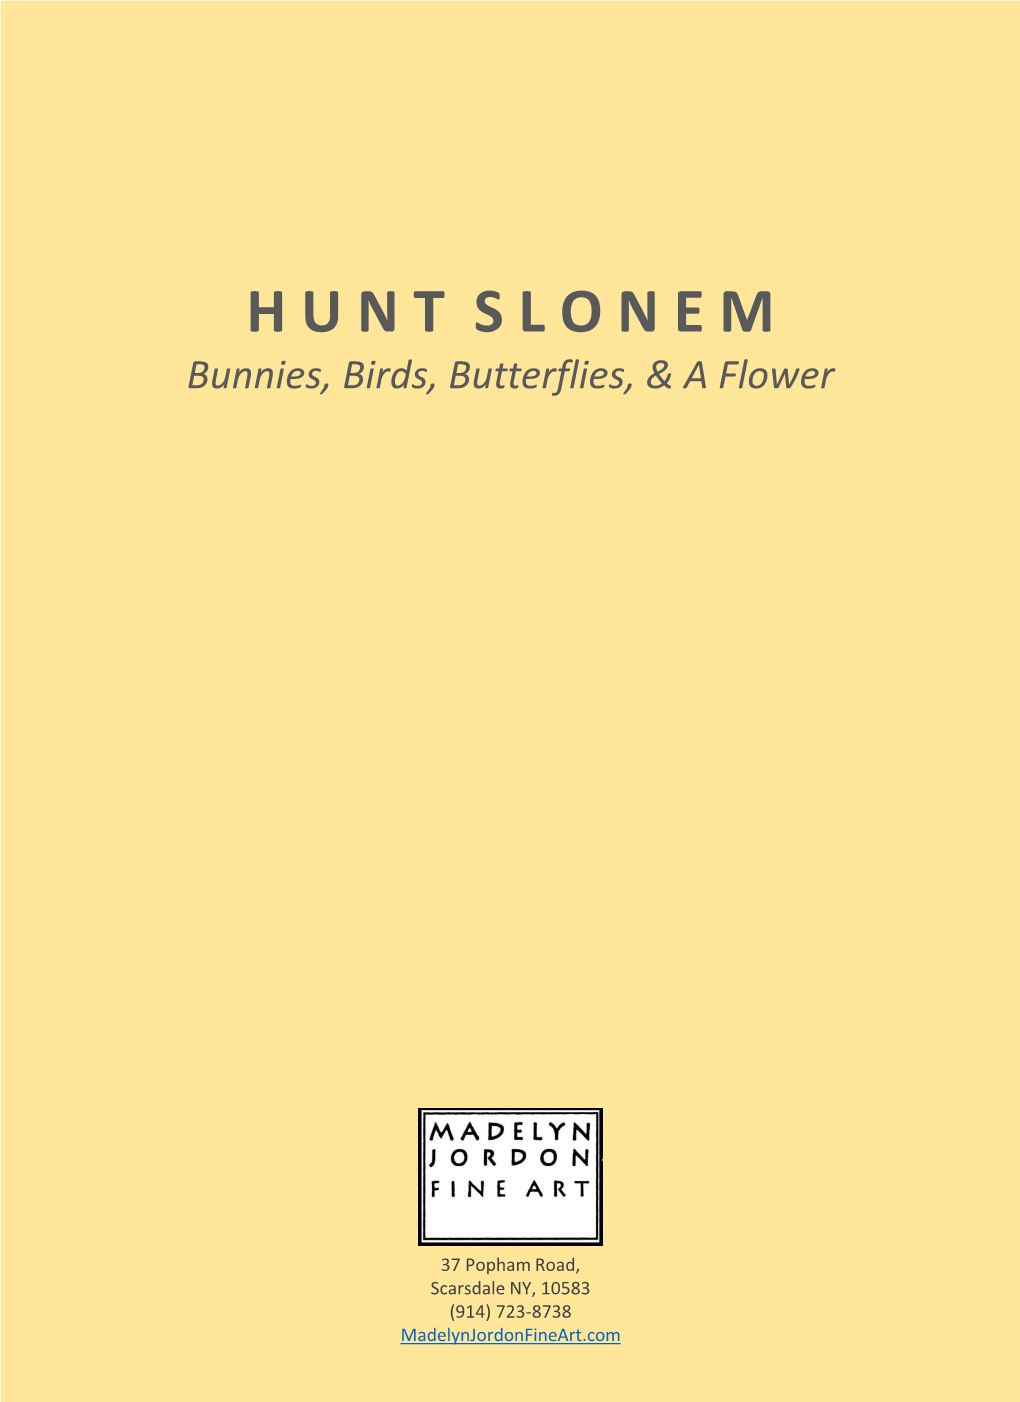 About Hunt Slonem